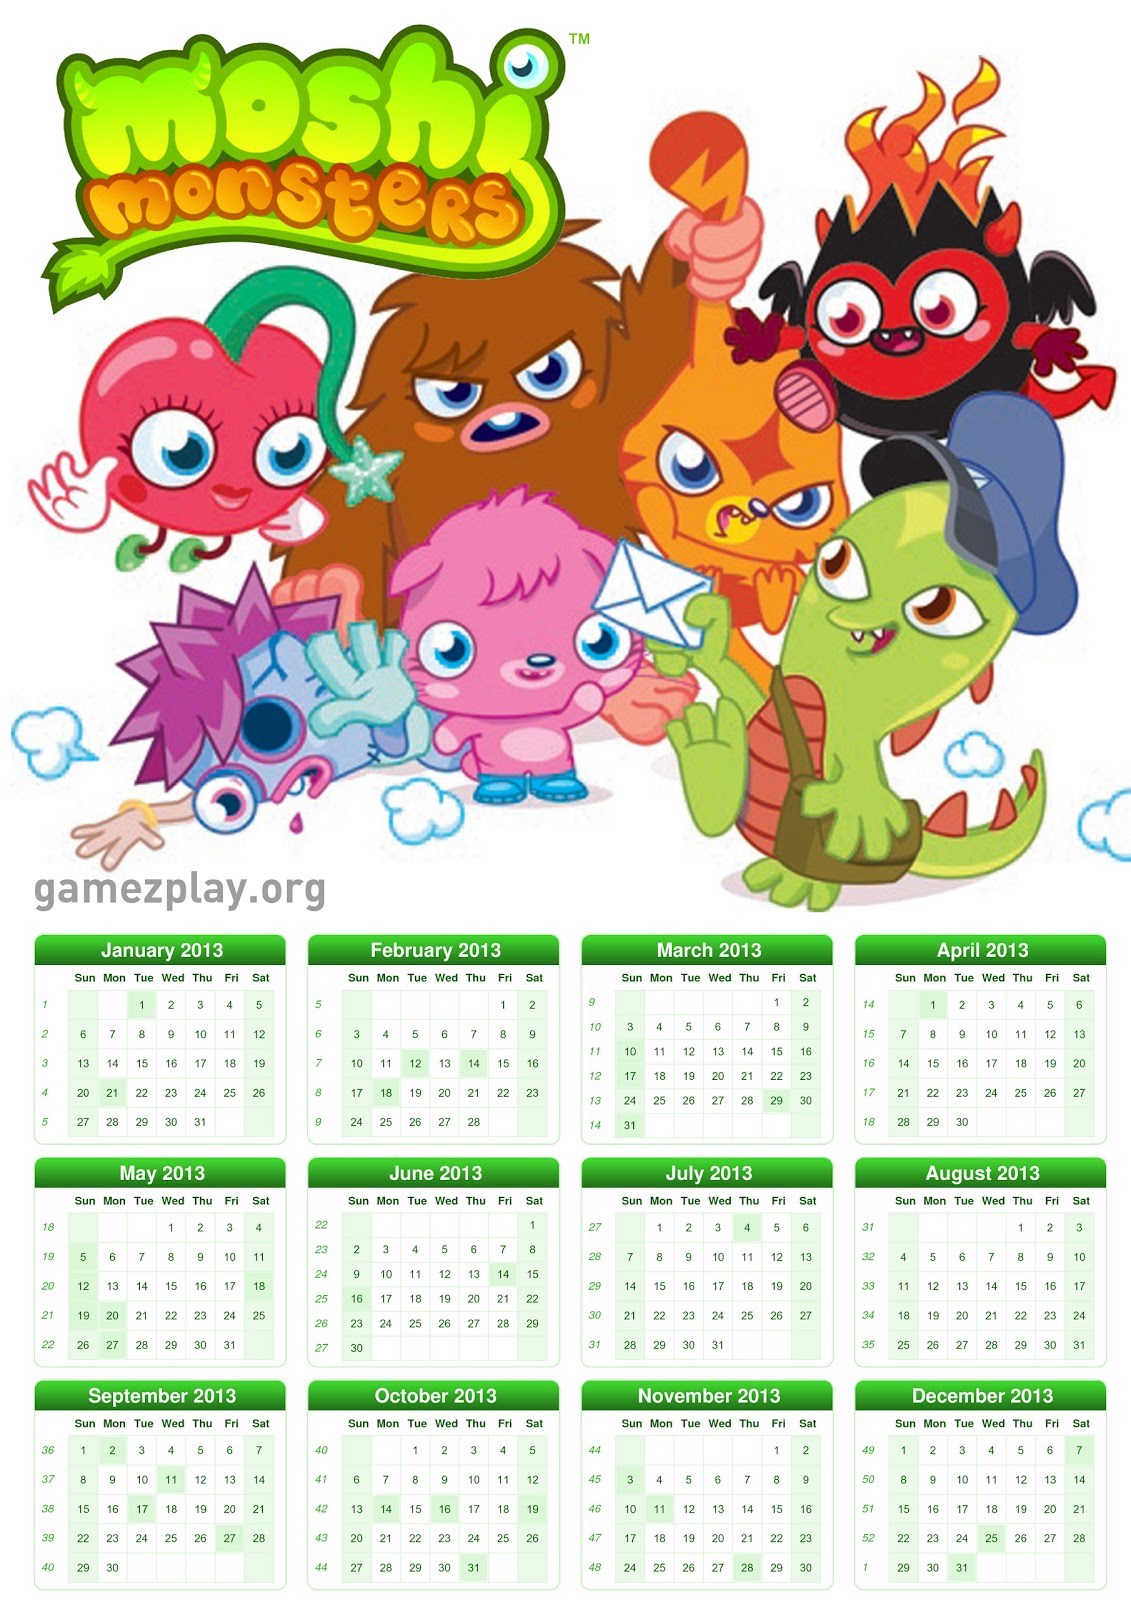 moshi monster 2013 calendar right click to download 3 7mb moshi